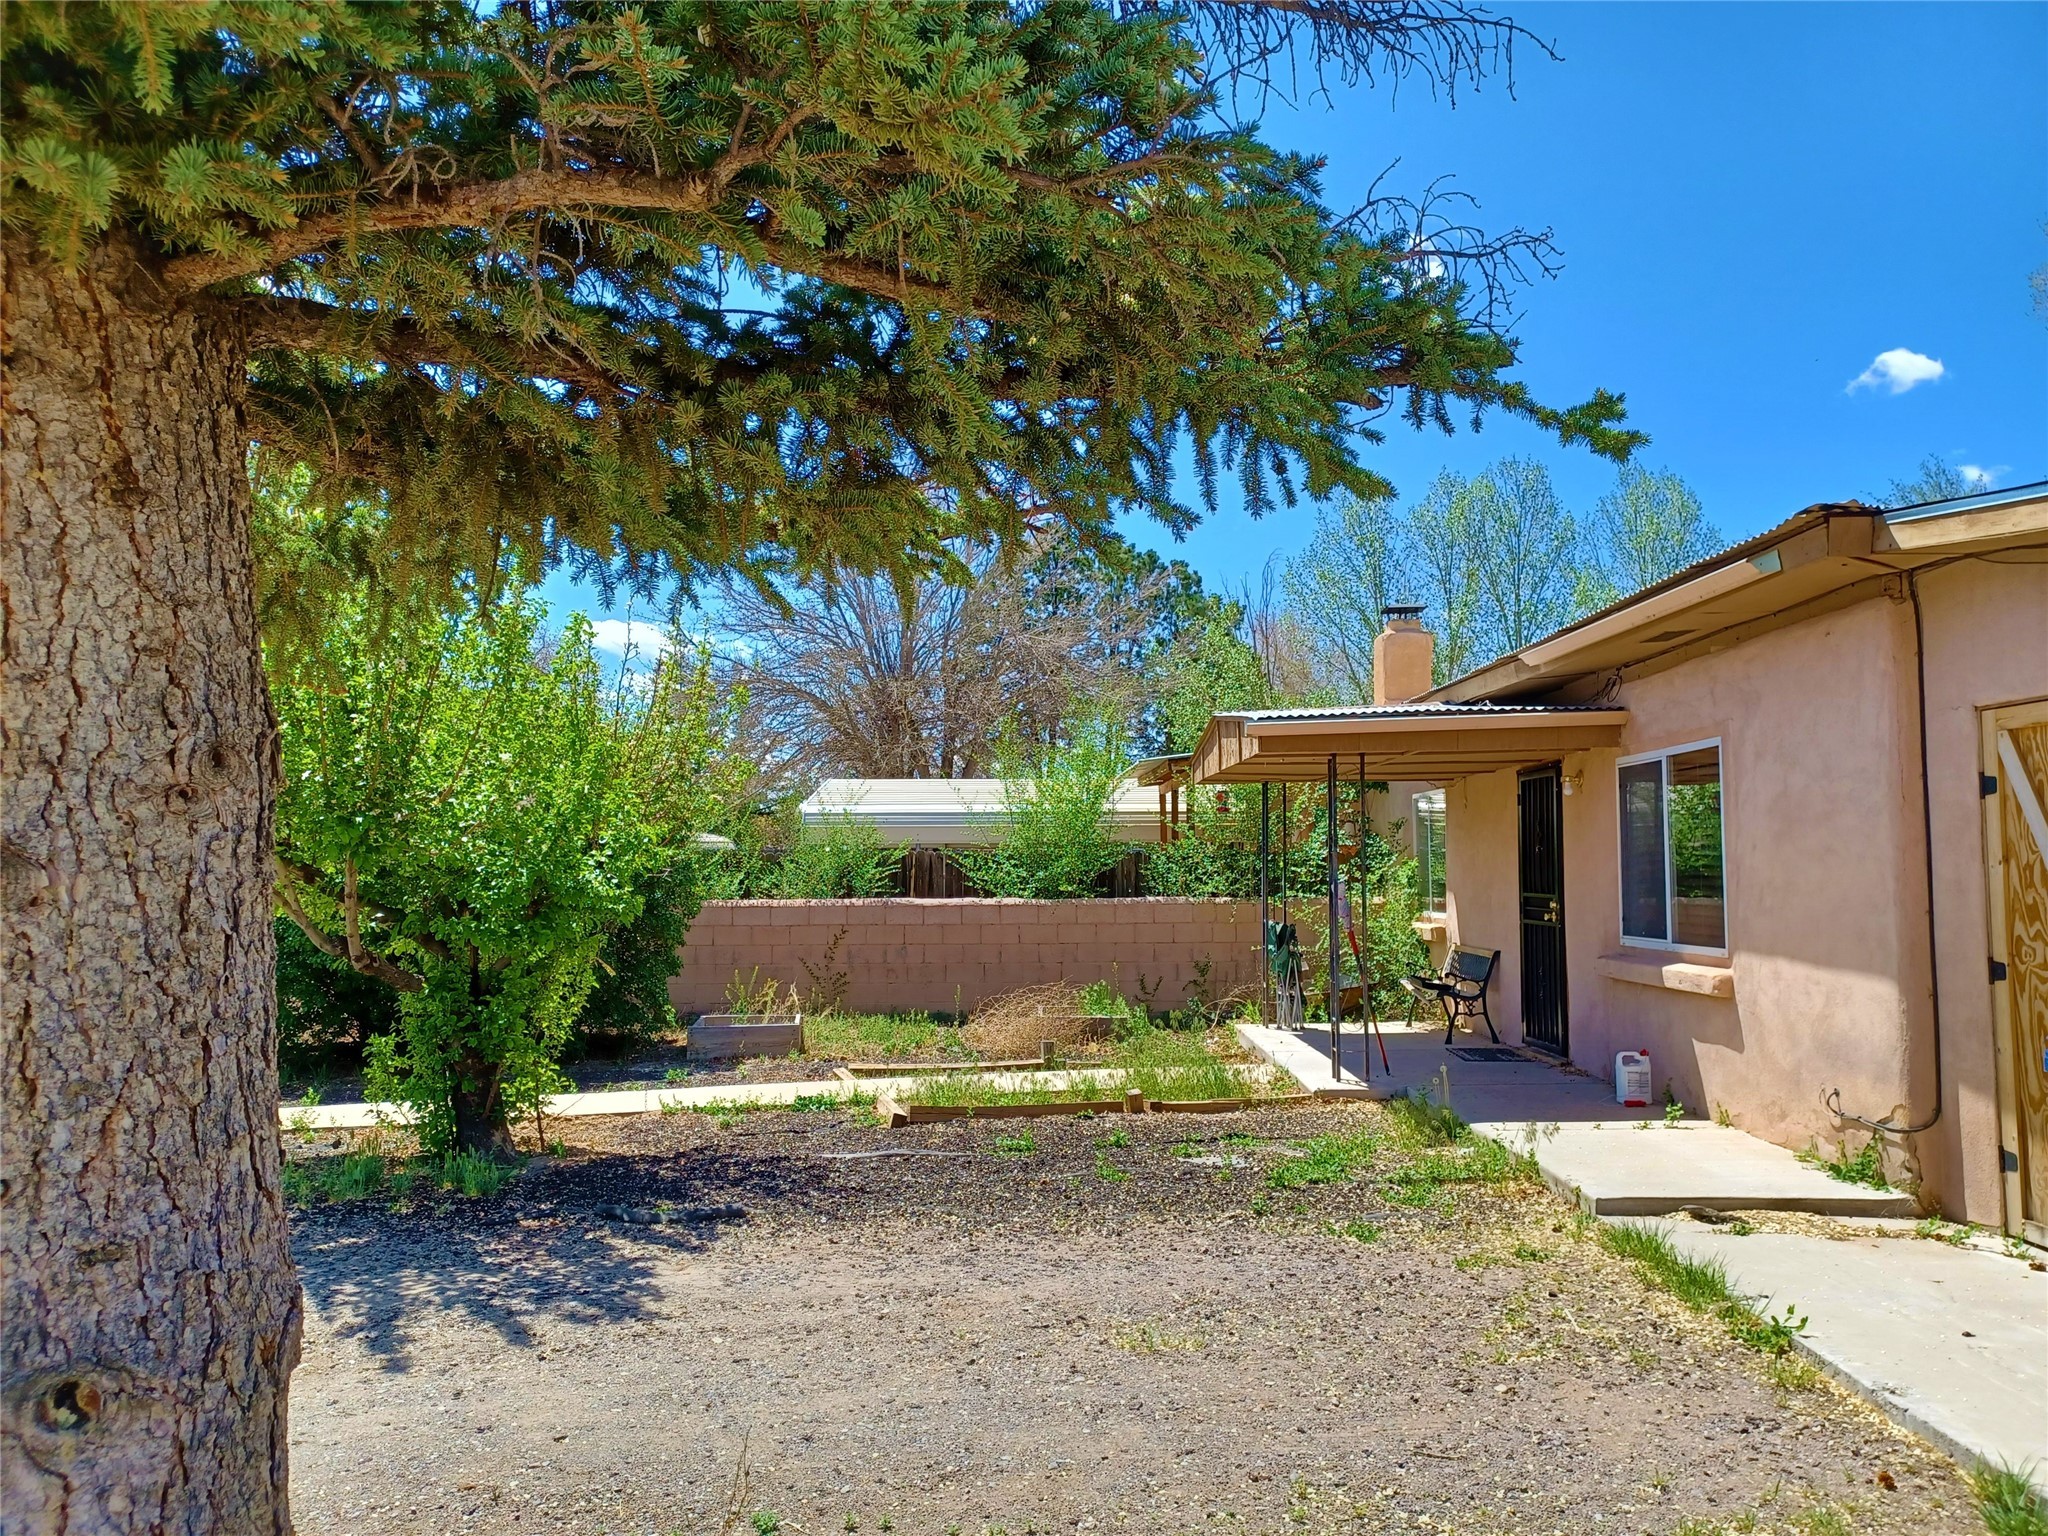 48 Sunlight, Santa Fe, New Mexico 87506, 3 Bedrooms Bedrooms, ,2 BathroomsBathrooms,Residential,For Sale,48 Sunlight,202337862